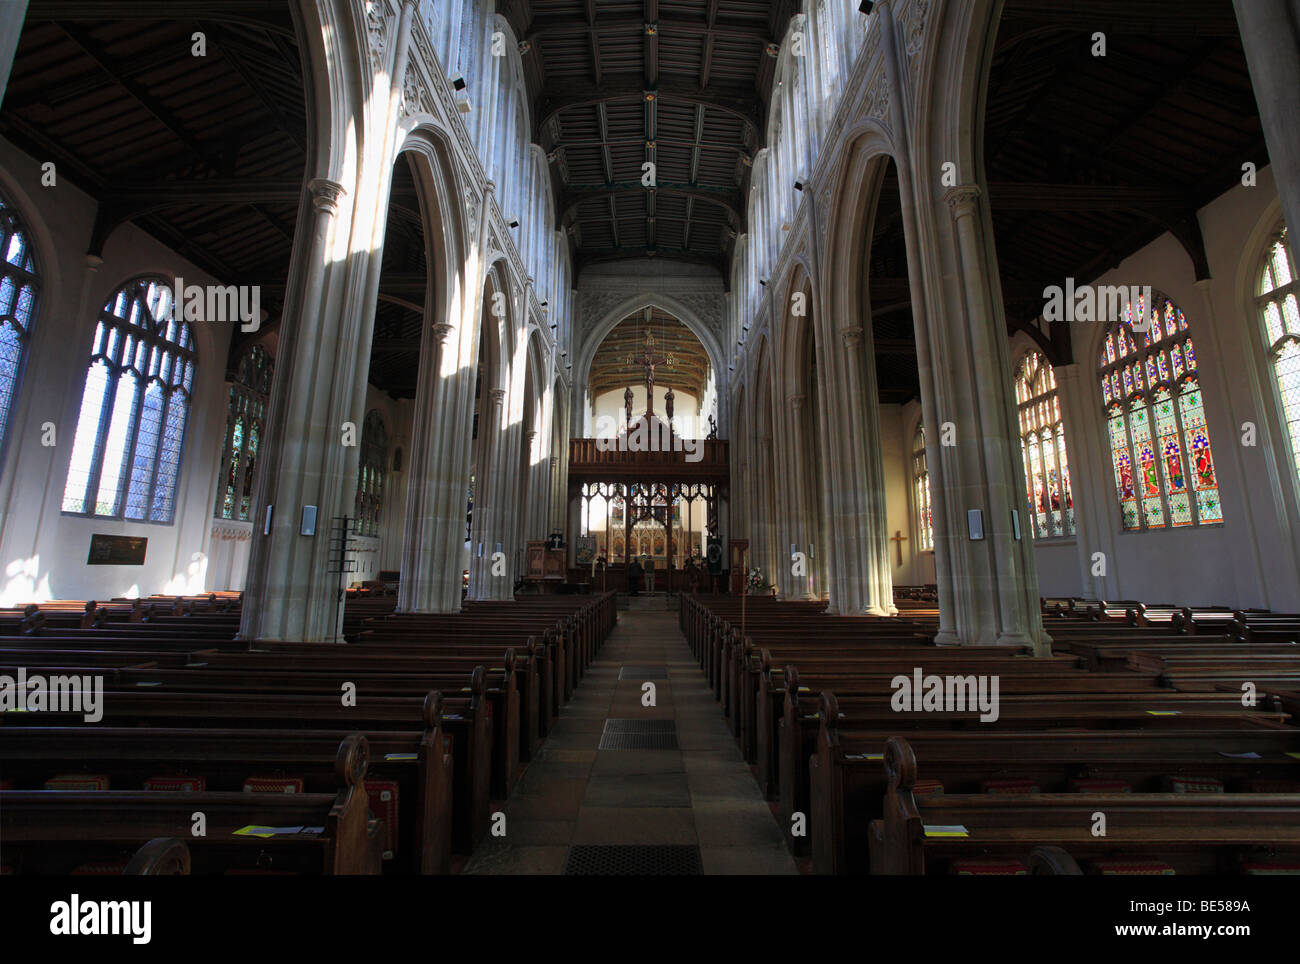 The interior of Saint Mary's Church, Saffron Walden, Essex, England. Stock Photo